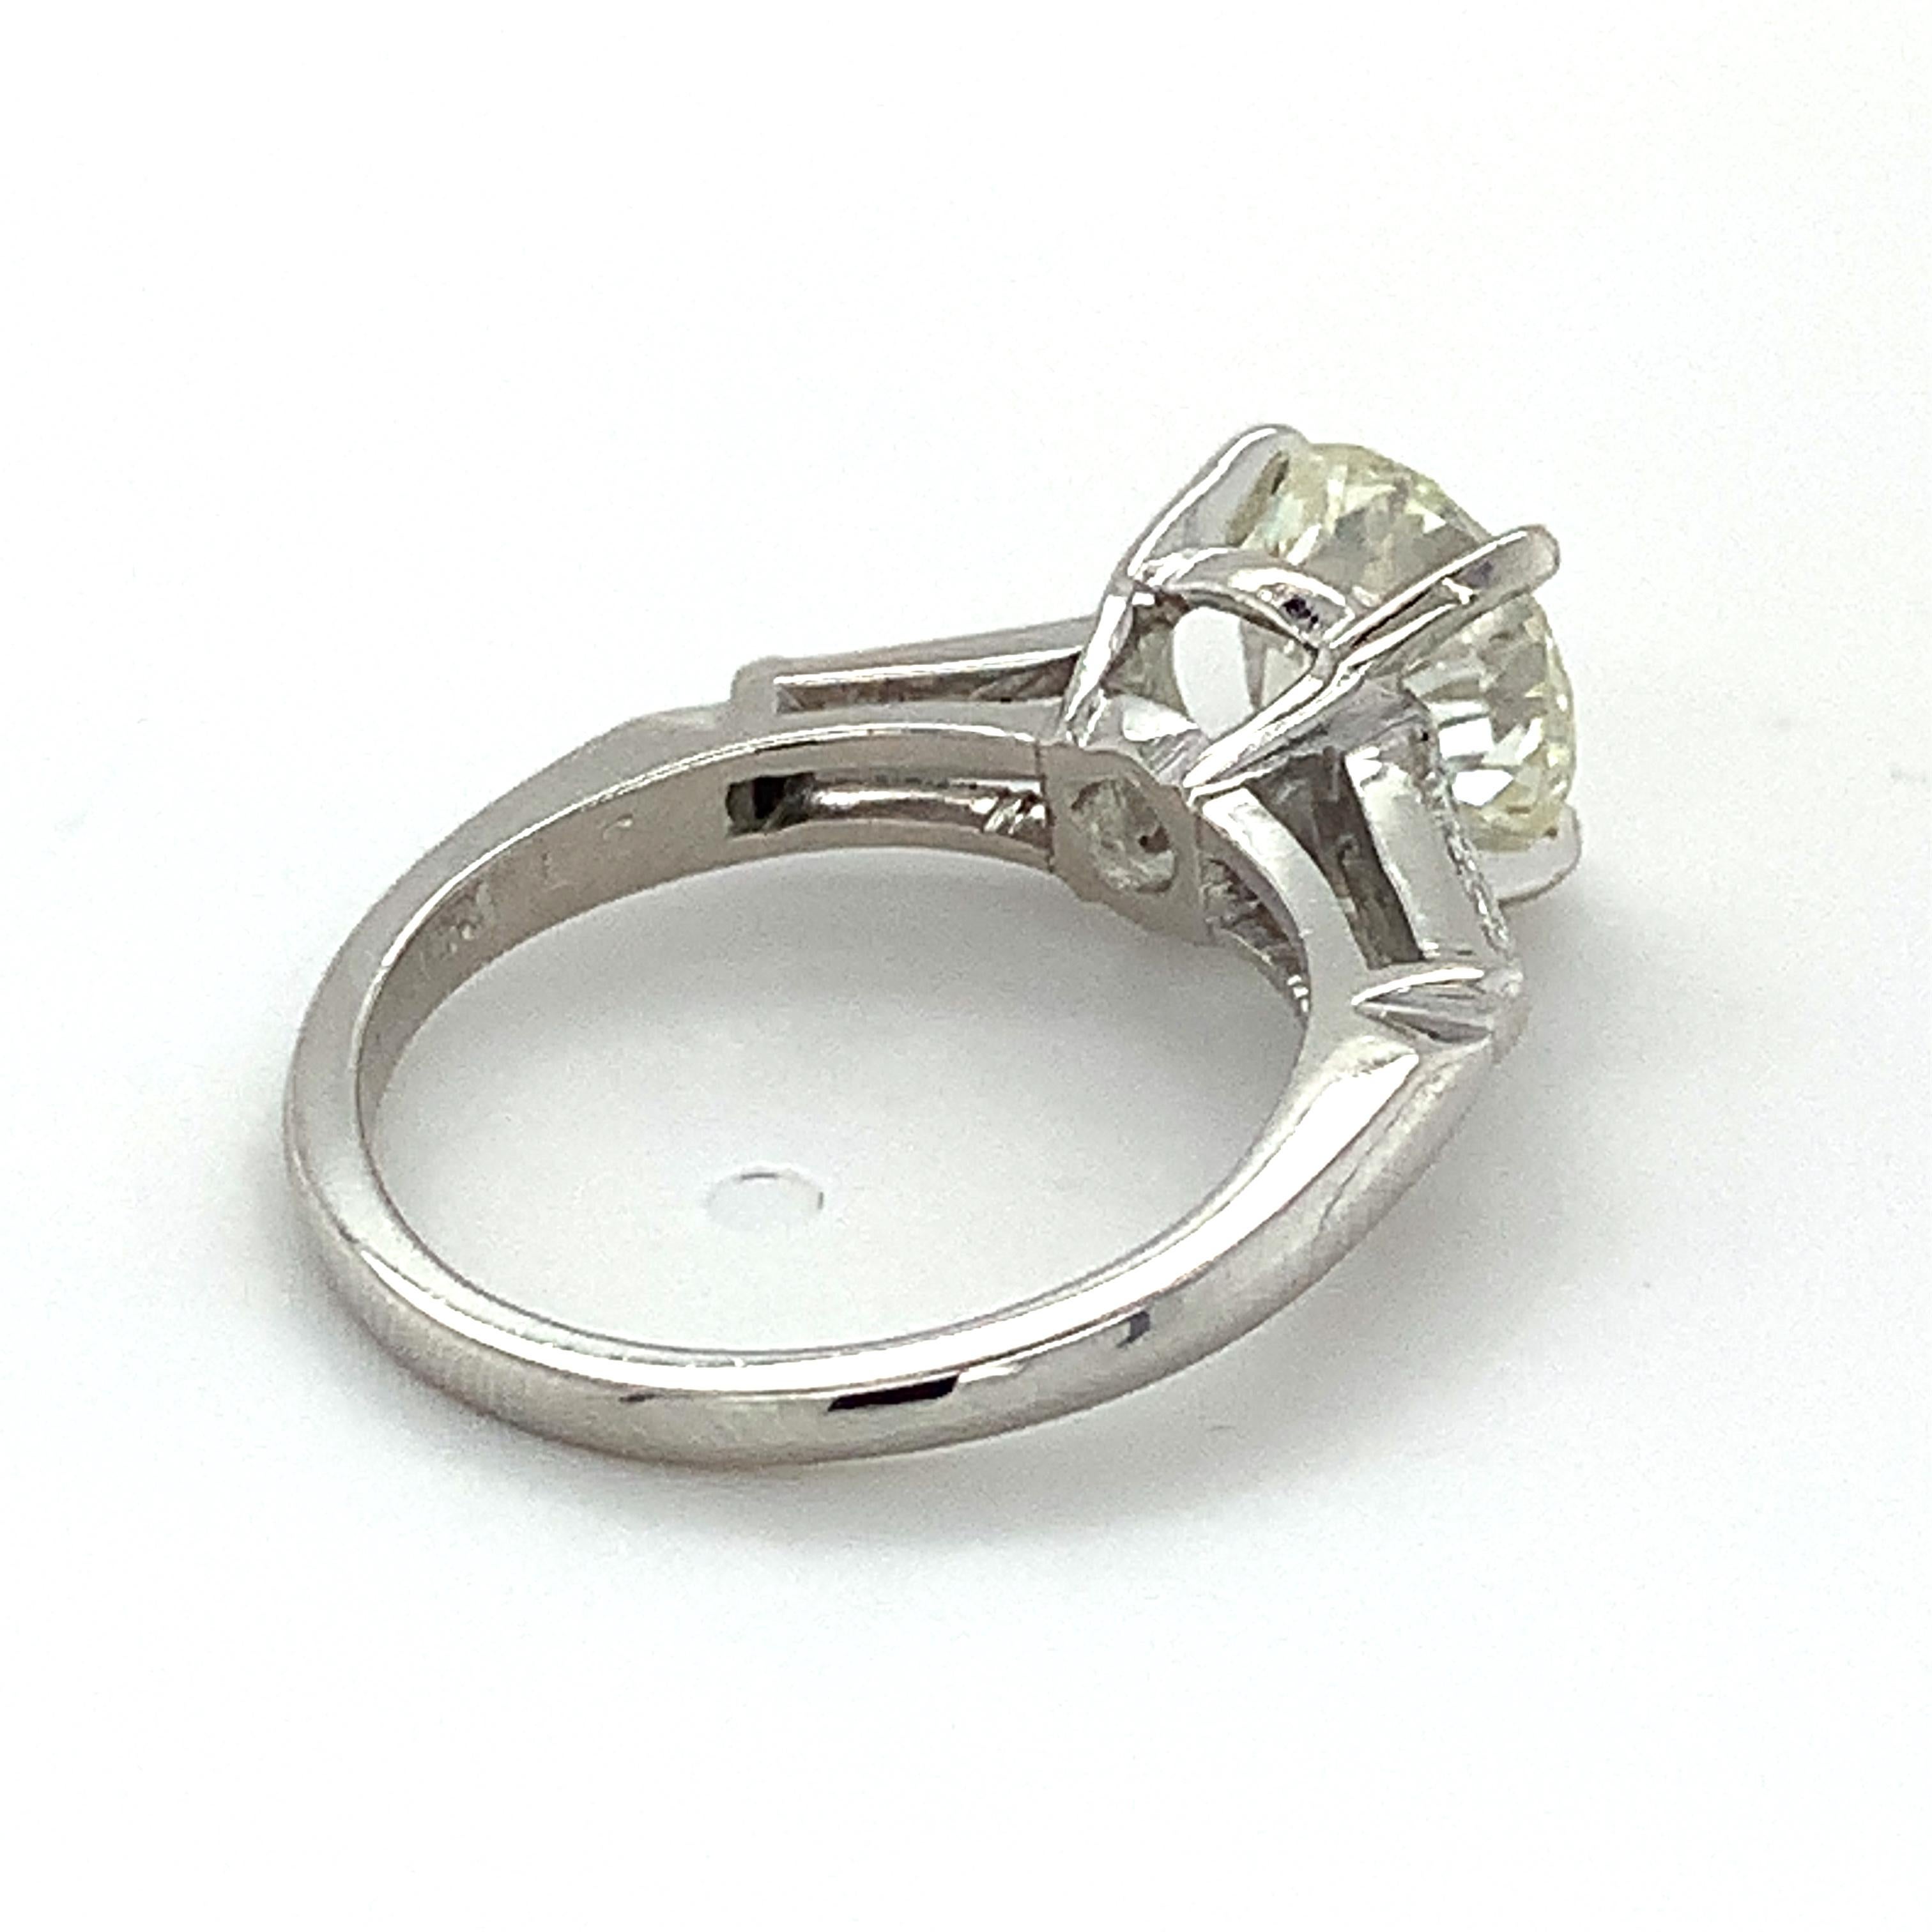 10% Irid 90% Plat GIA 2.12 L-VVS2 Round Diamond & Tapered Baguette 3 Stone Ring 2